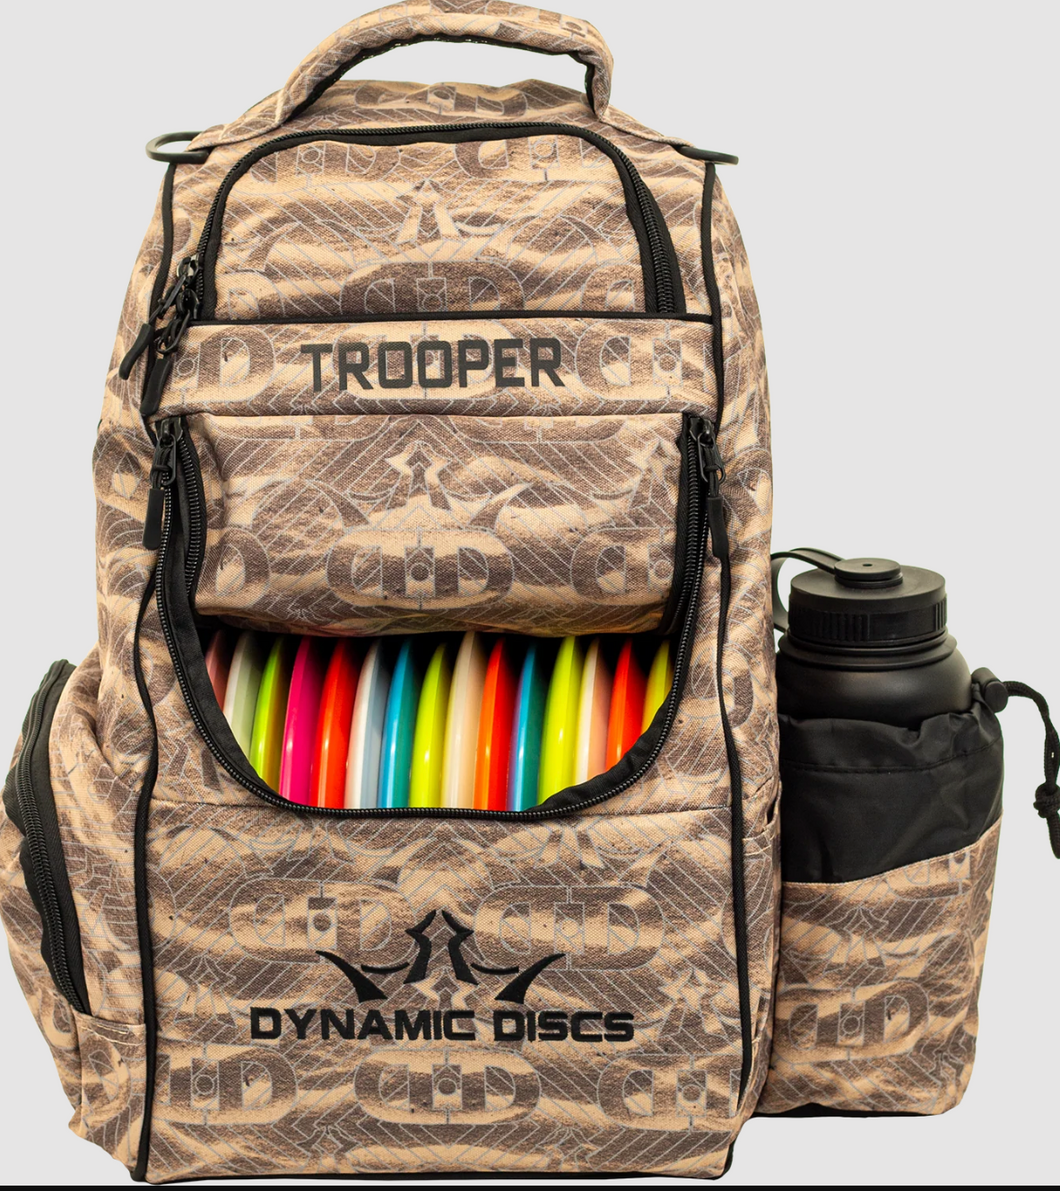 Dynamic Discs L.E. Trooper Backpack